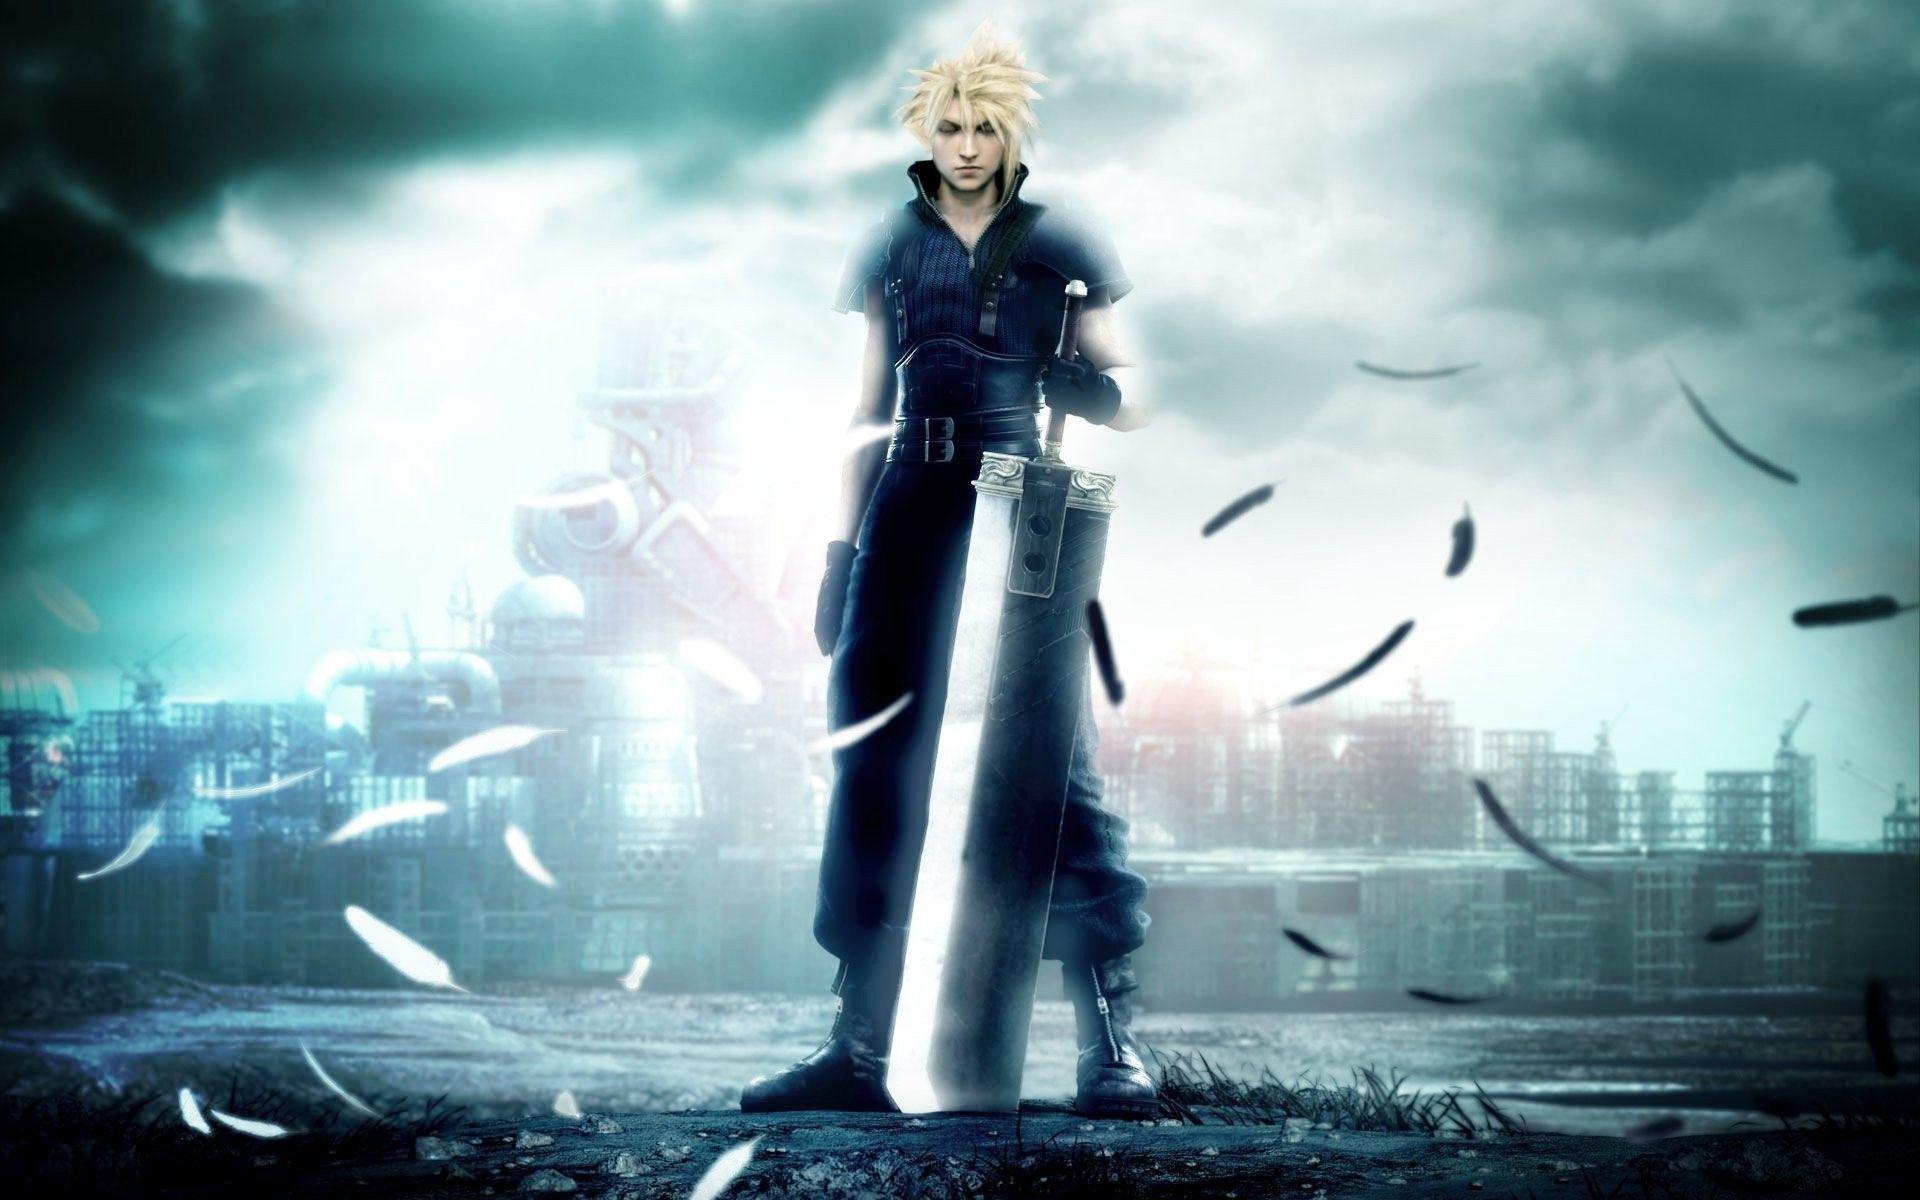 Final Fantasy Vii Remake Wallpapers Top Free Final Fantasy Vii Remake Backgrounds Wallpaperaccess